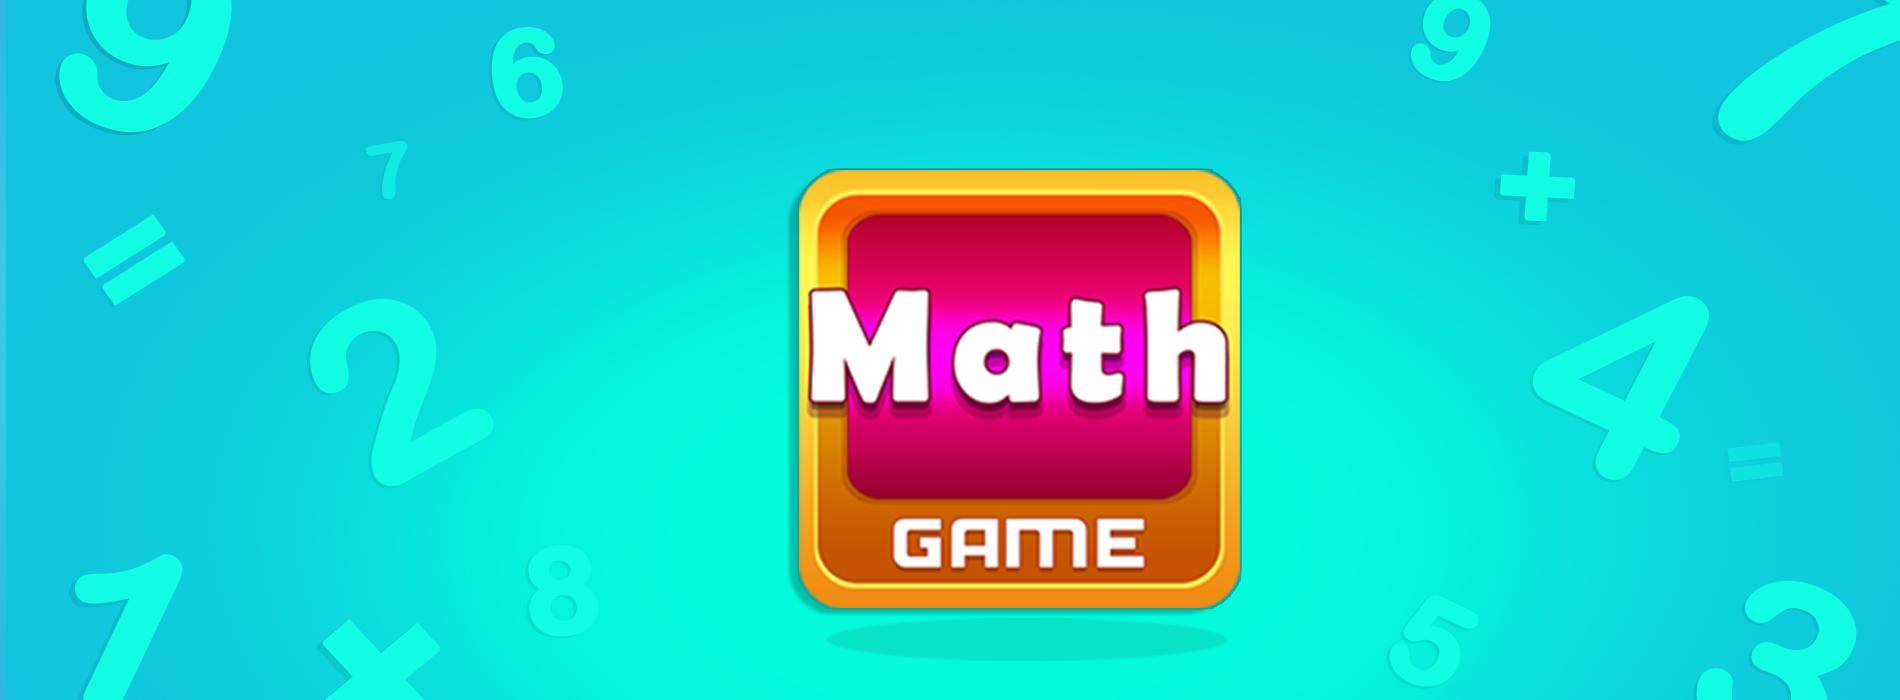 Free games to Improve Math Skills | Math Game Download